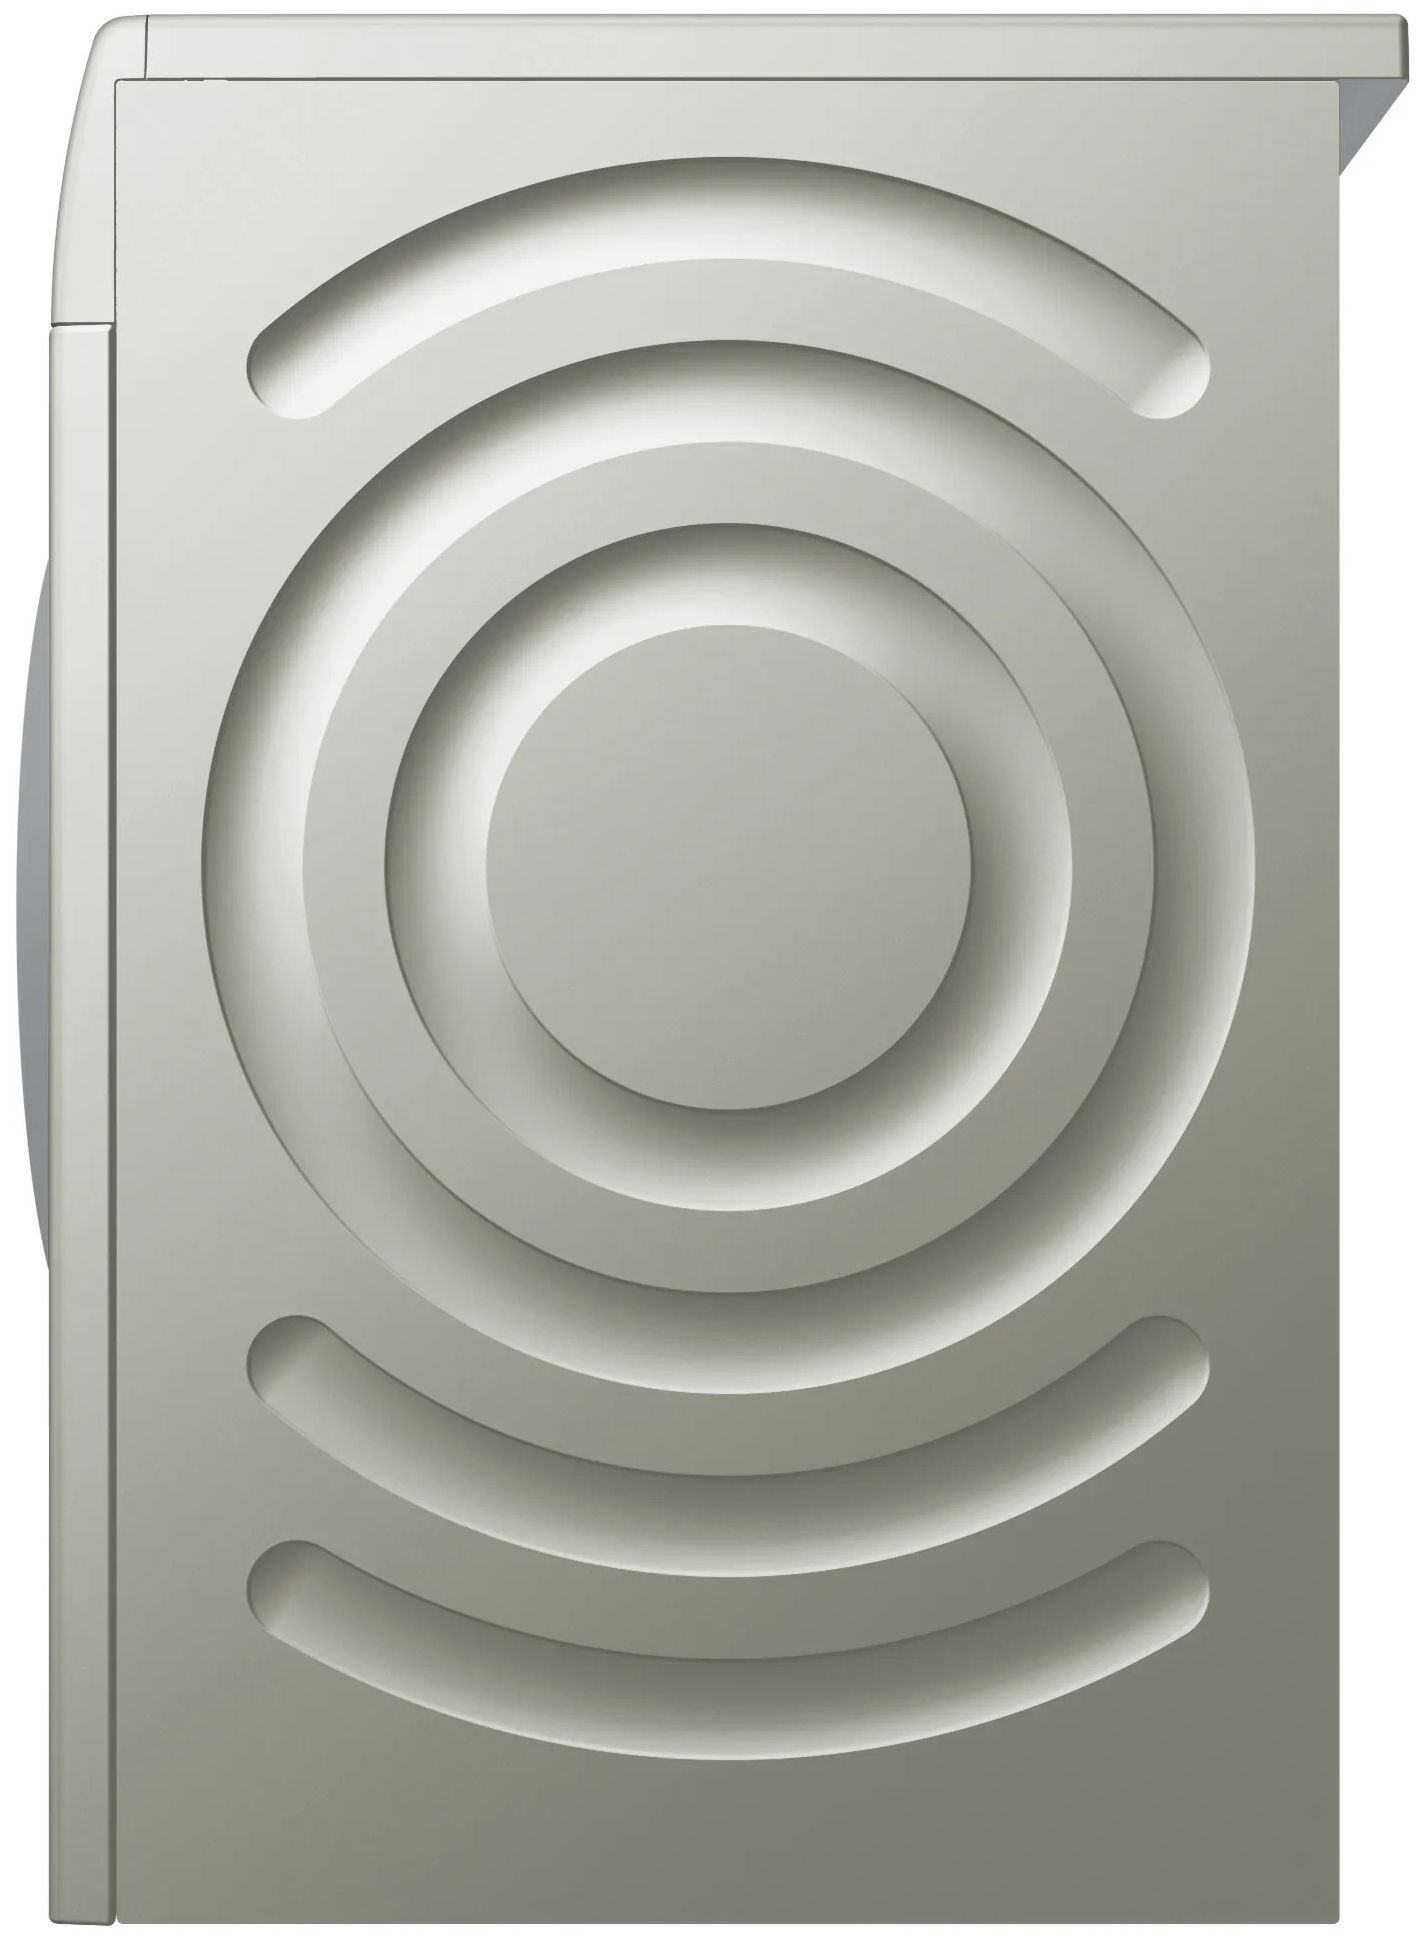 10 Bosch Waschmaschine bei A 8 AutoClean aquaStop Boomstore Serie U/min kg Frontlader 1600 WGB2560X0 EEK: